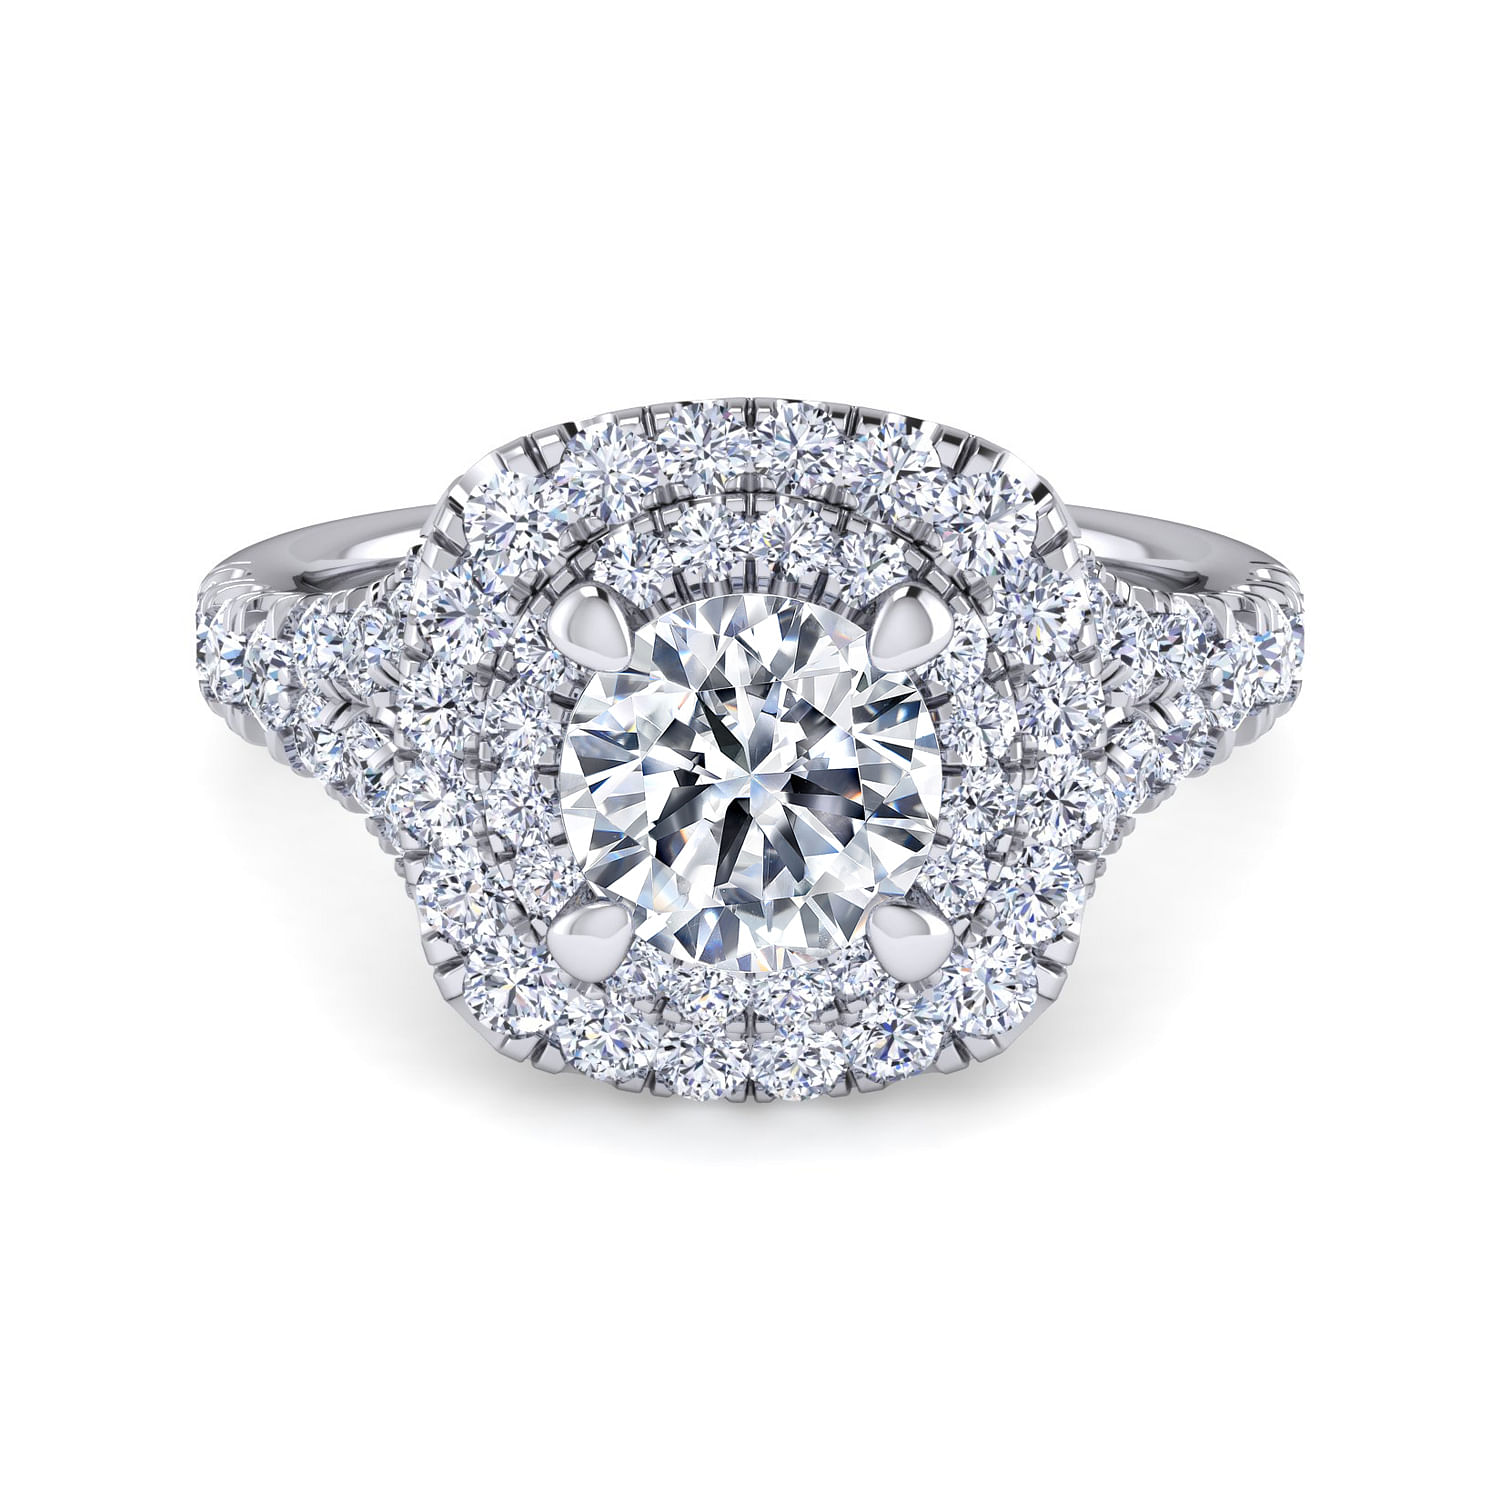 Lexie - 14k White Gold Cushion Double Halo Round Diamond Engagement Ring